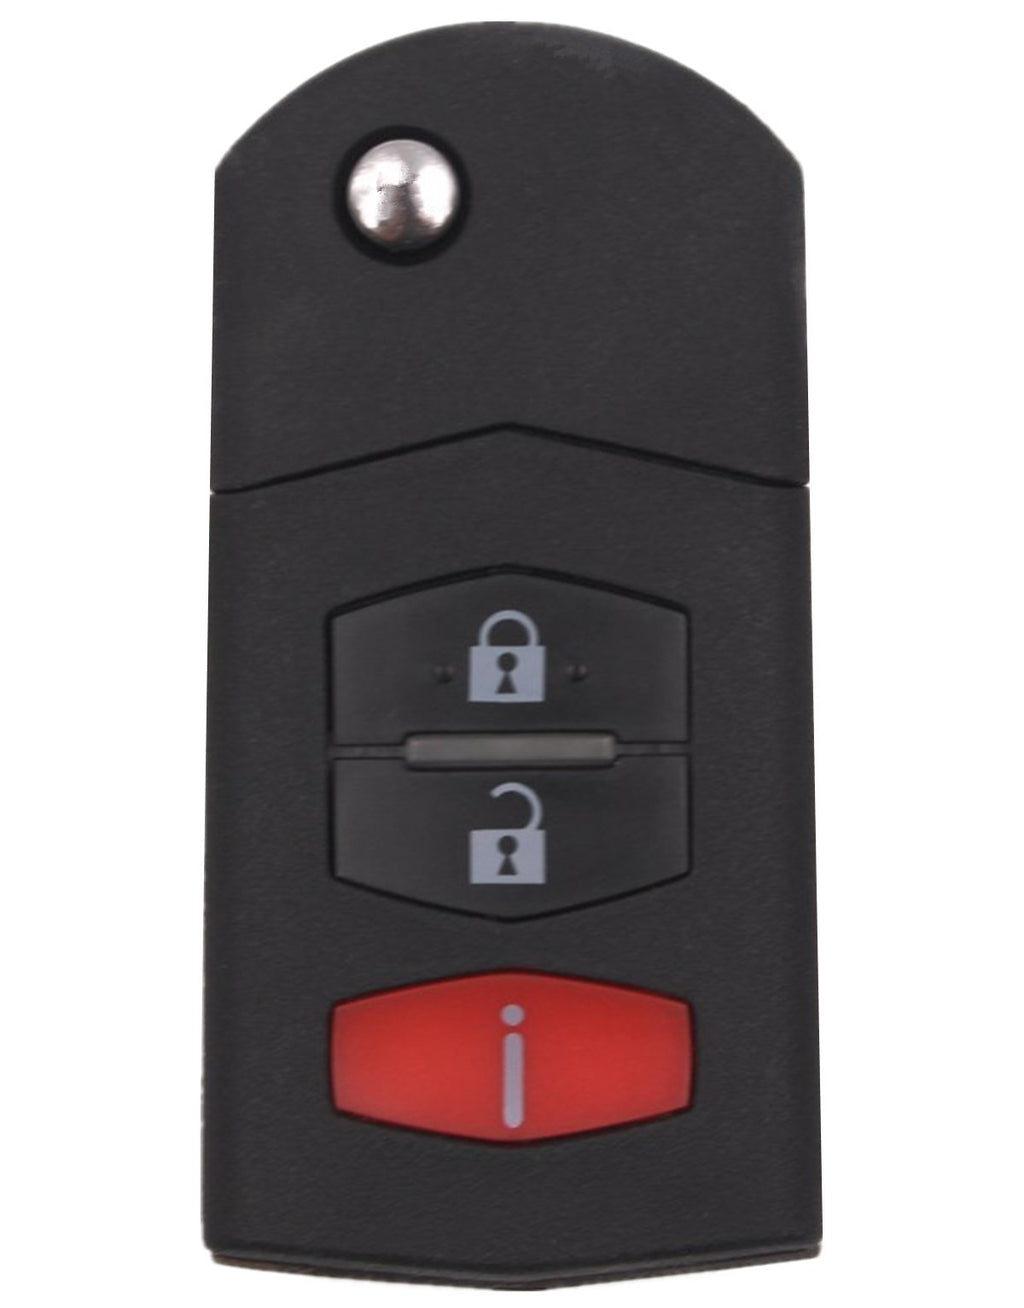  [AUSTRALIA] - Replacement Remote Keyless Fob Key Case (Shell) for Mazda CX5 CX7 RX8 CX9 MX5 KPU41788 4238A-41525